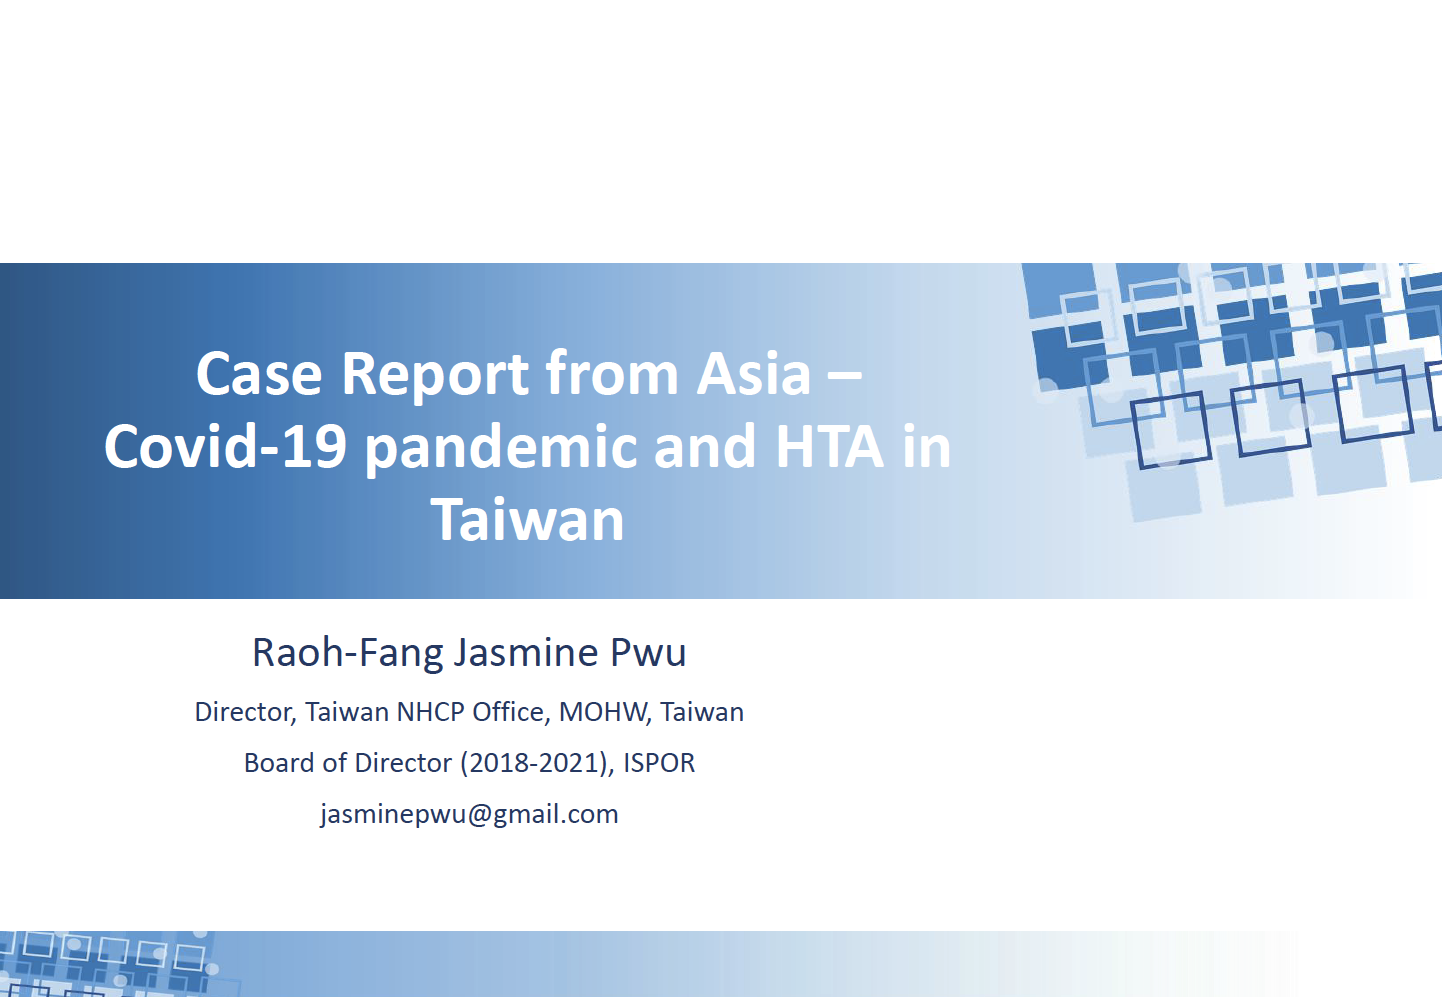 Raoh-Fang (Jasmine) Pwu, Director, National Hepatitis C Program Office, Ministry of Health and Welfare, Taiwan PDF